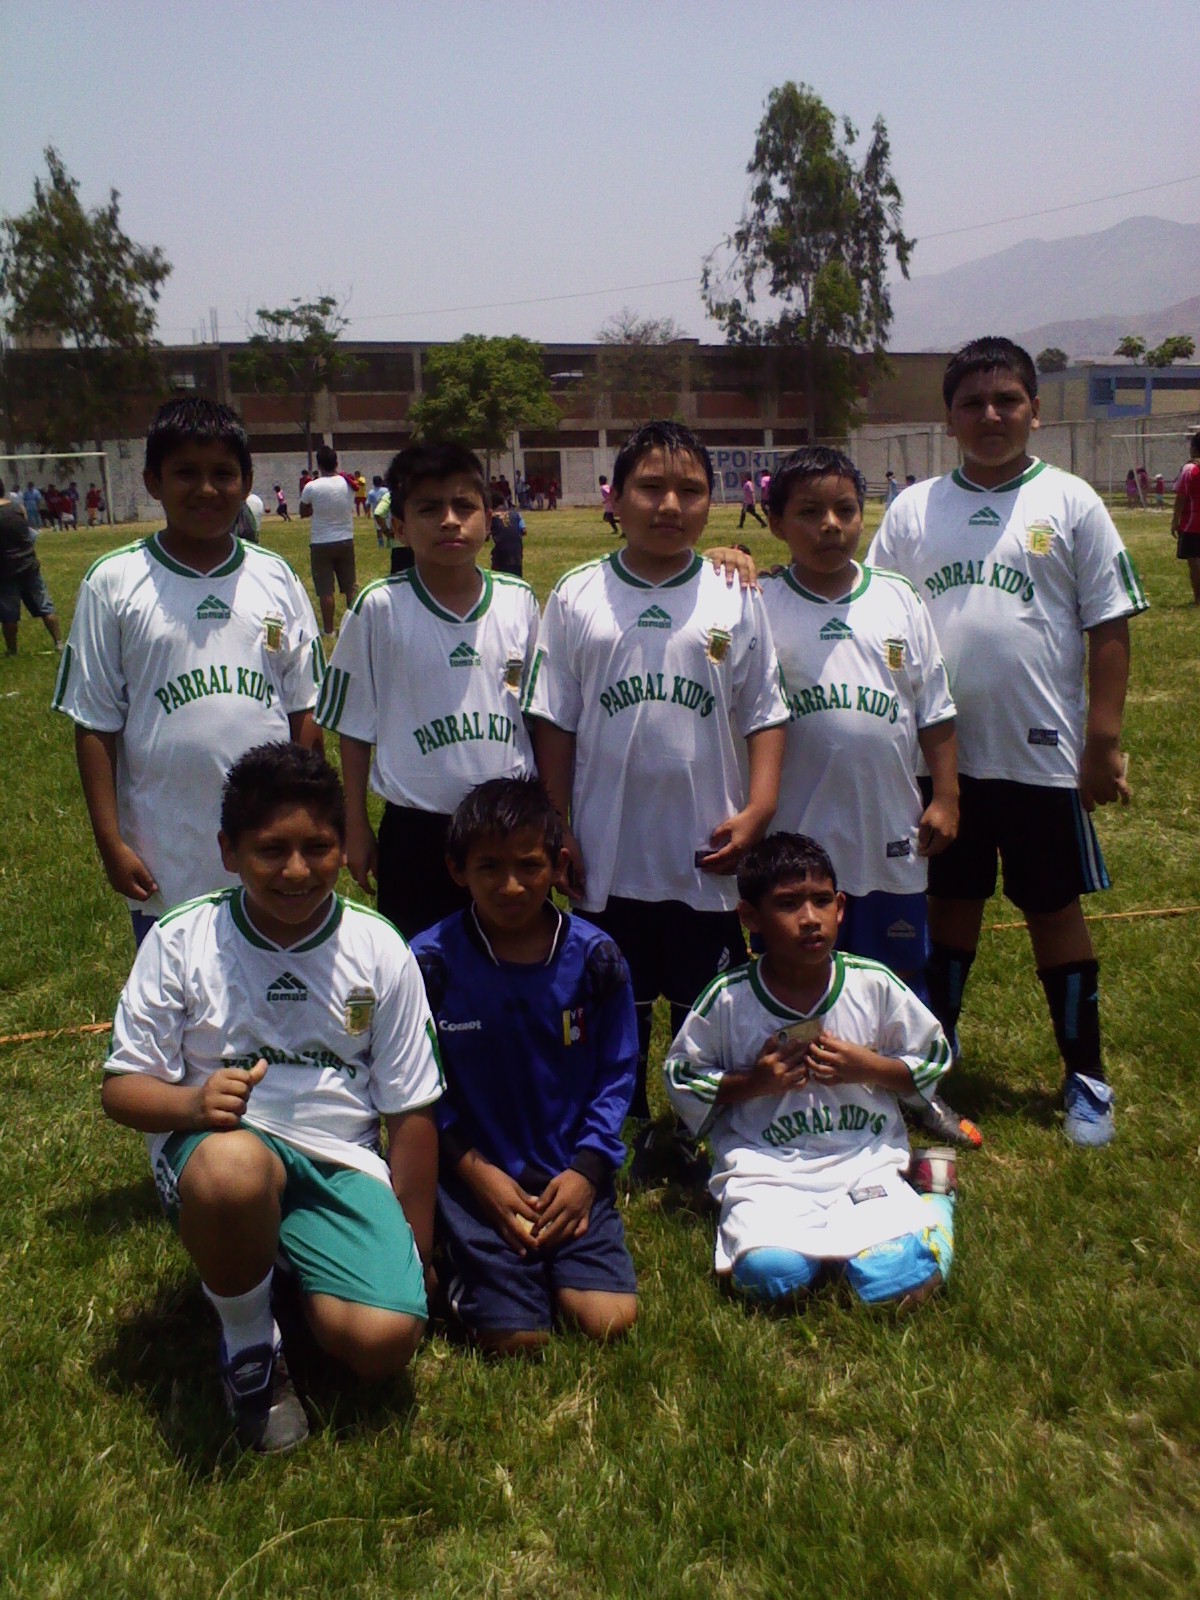 Escuela de Futbol Base "Parral Kids"